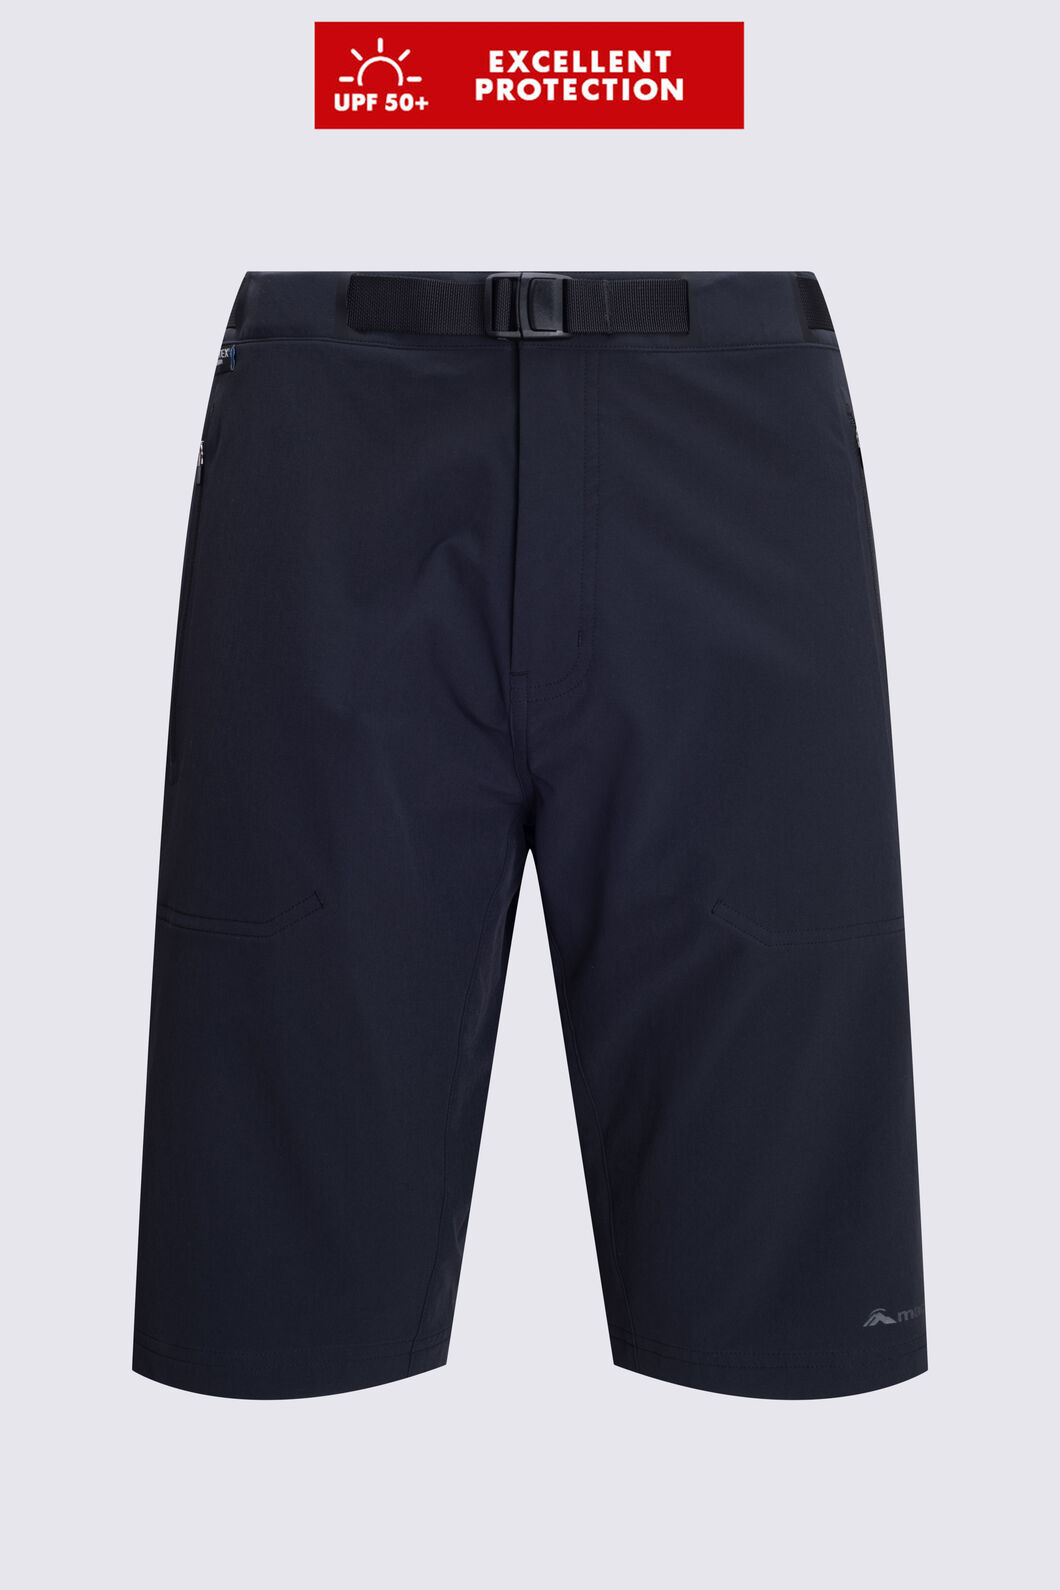 Macpac Trekker Pertex® Equilibrium Softshell Shorts — Men's | Macpac